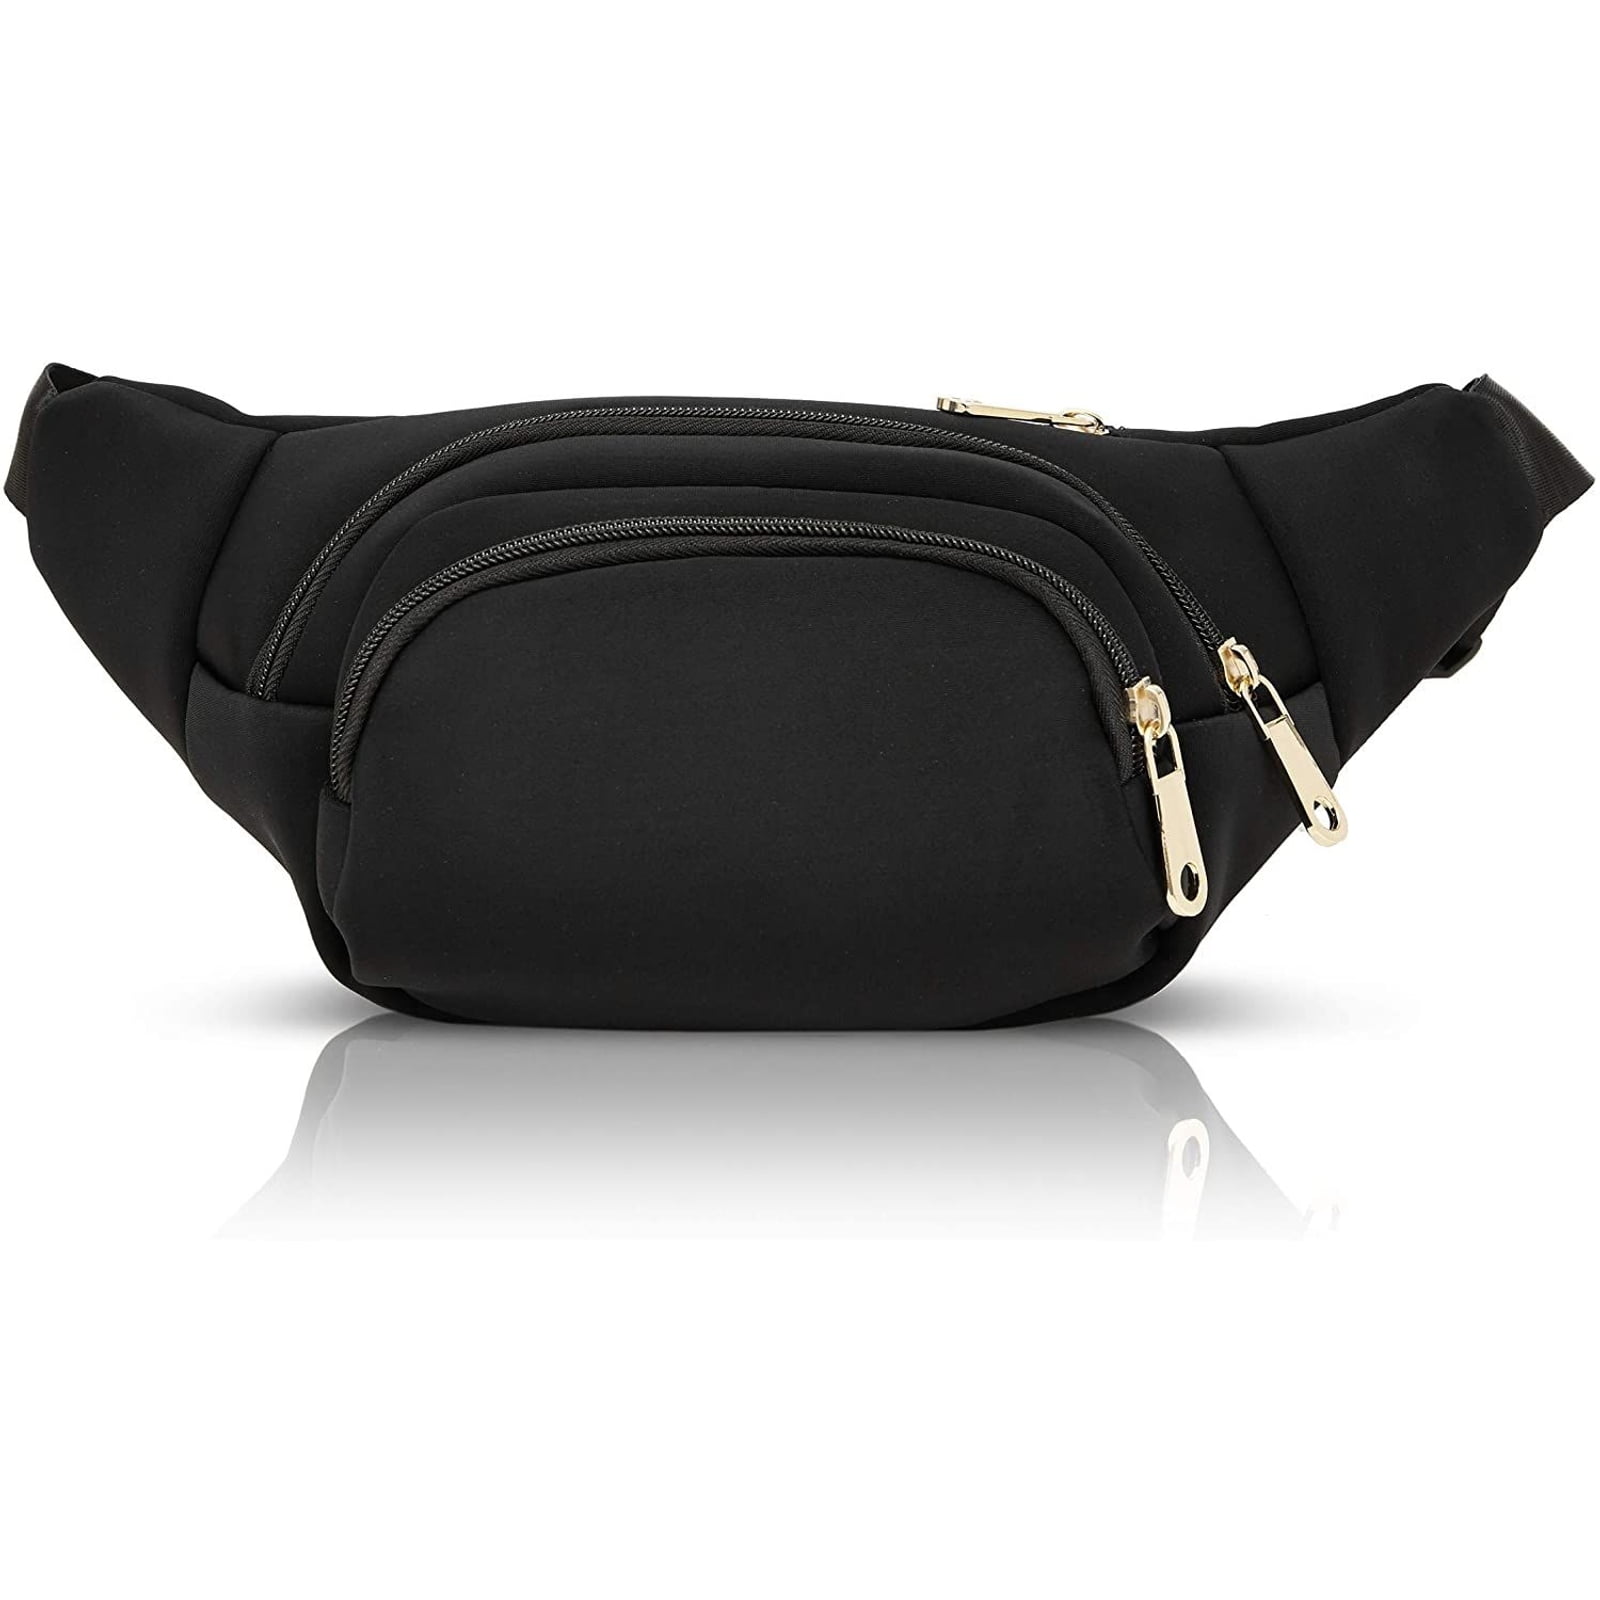 Plus Size Black Fanny Pack, Crossbody Bag with Adjustable Belt Straps ...